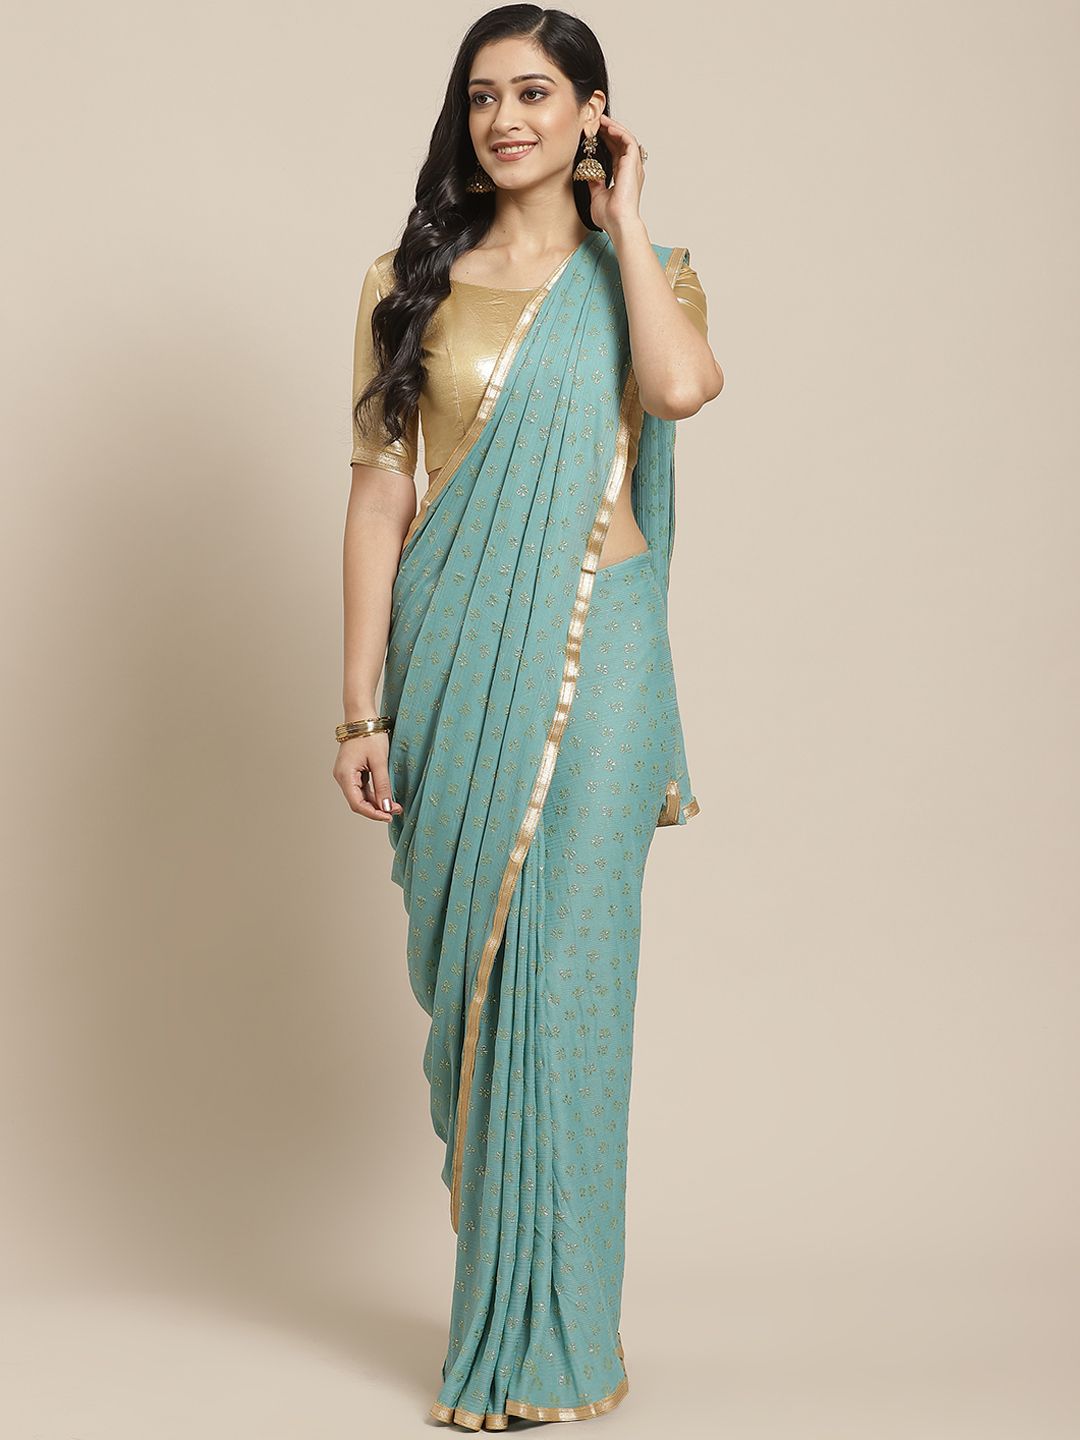 Saree mall Blue & Golden Quirky Print Saree Price in India